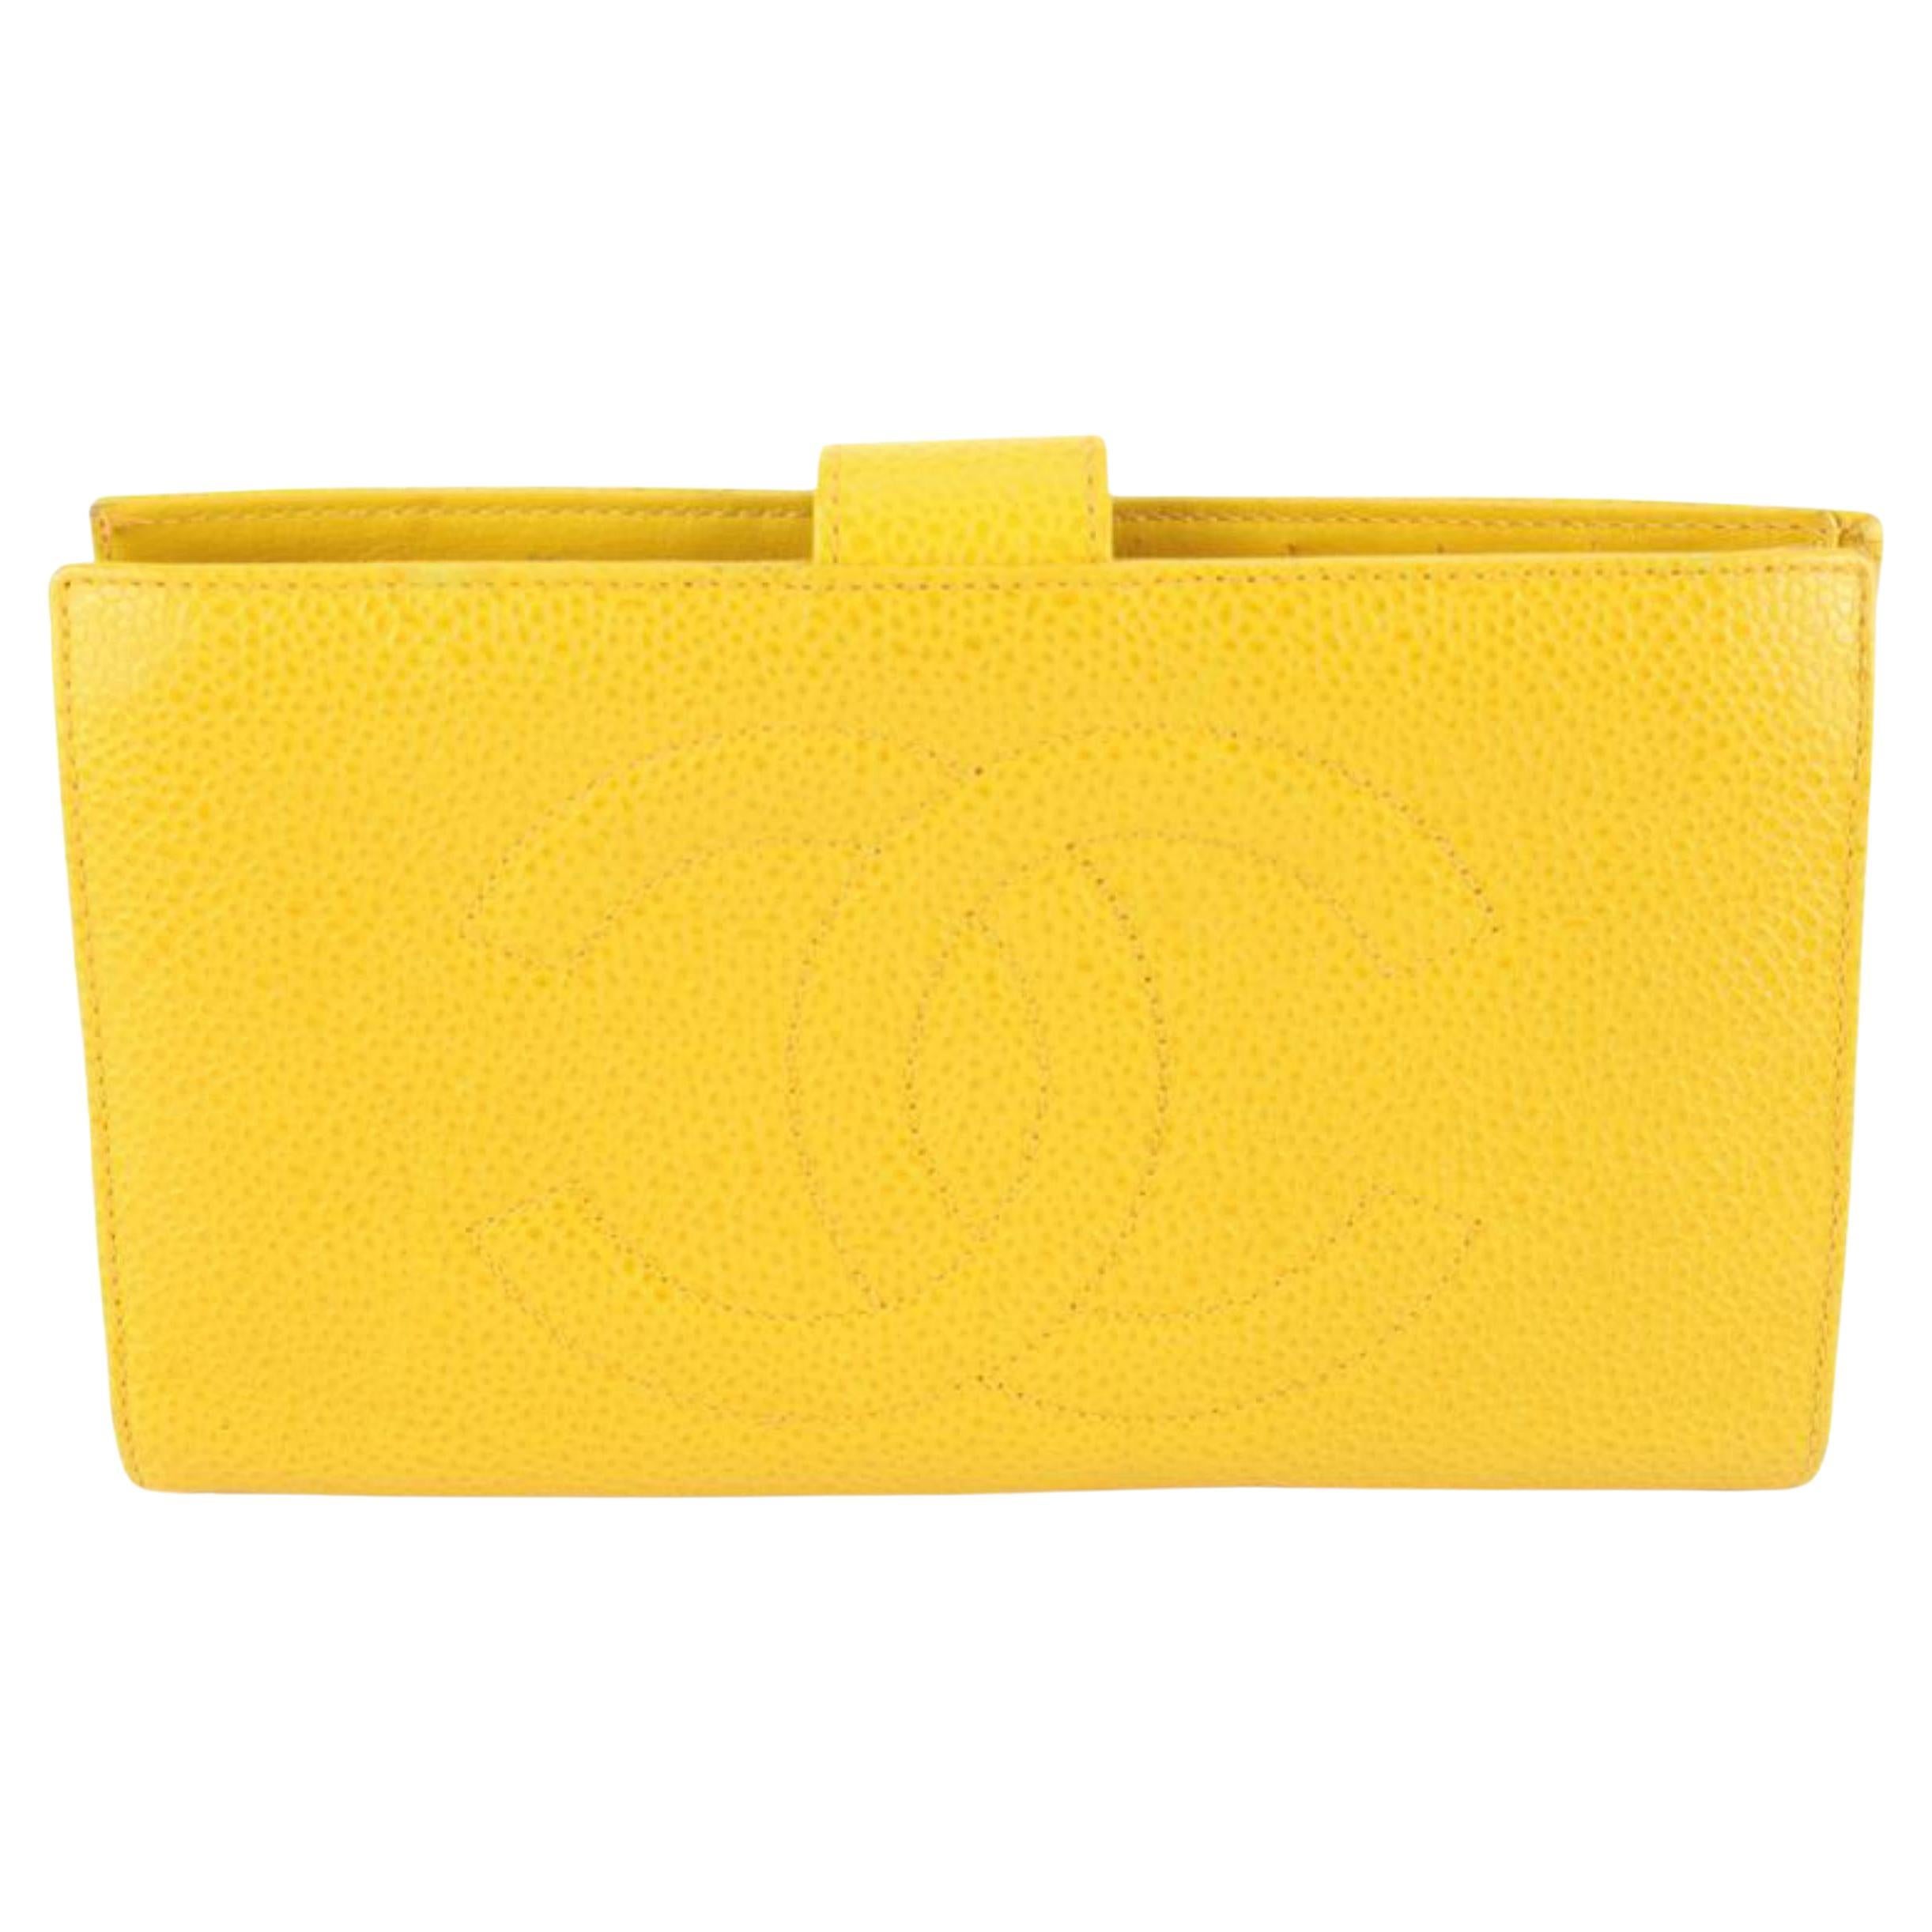 Chanel Yellow Caviar Leather Timeless CC Logo Long Flap Wallet 72cz56s